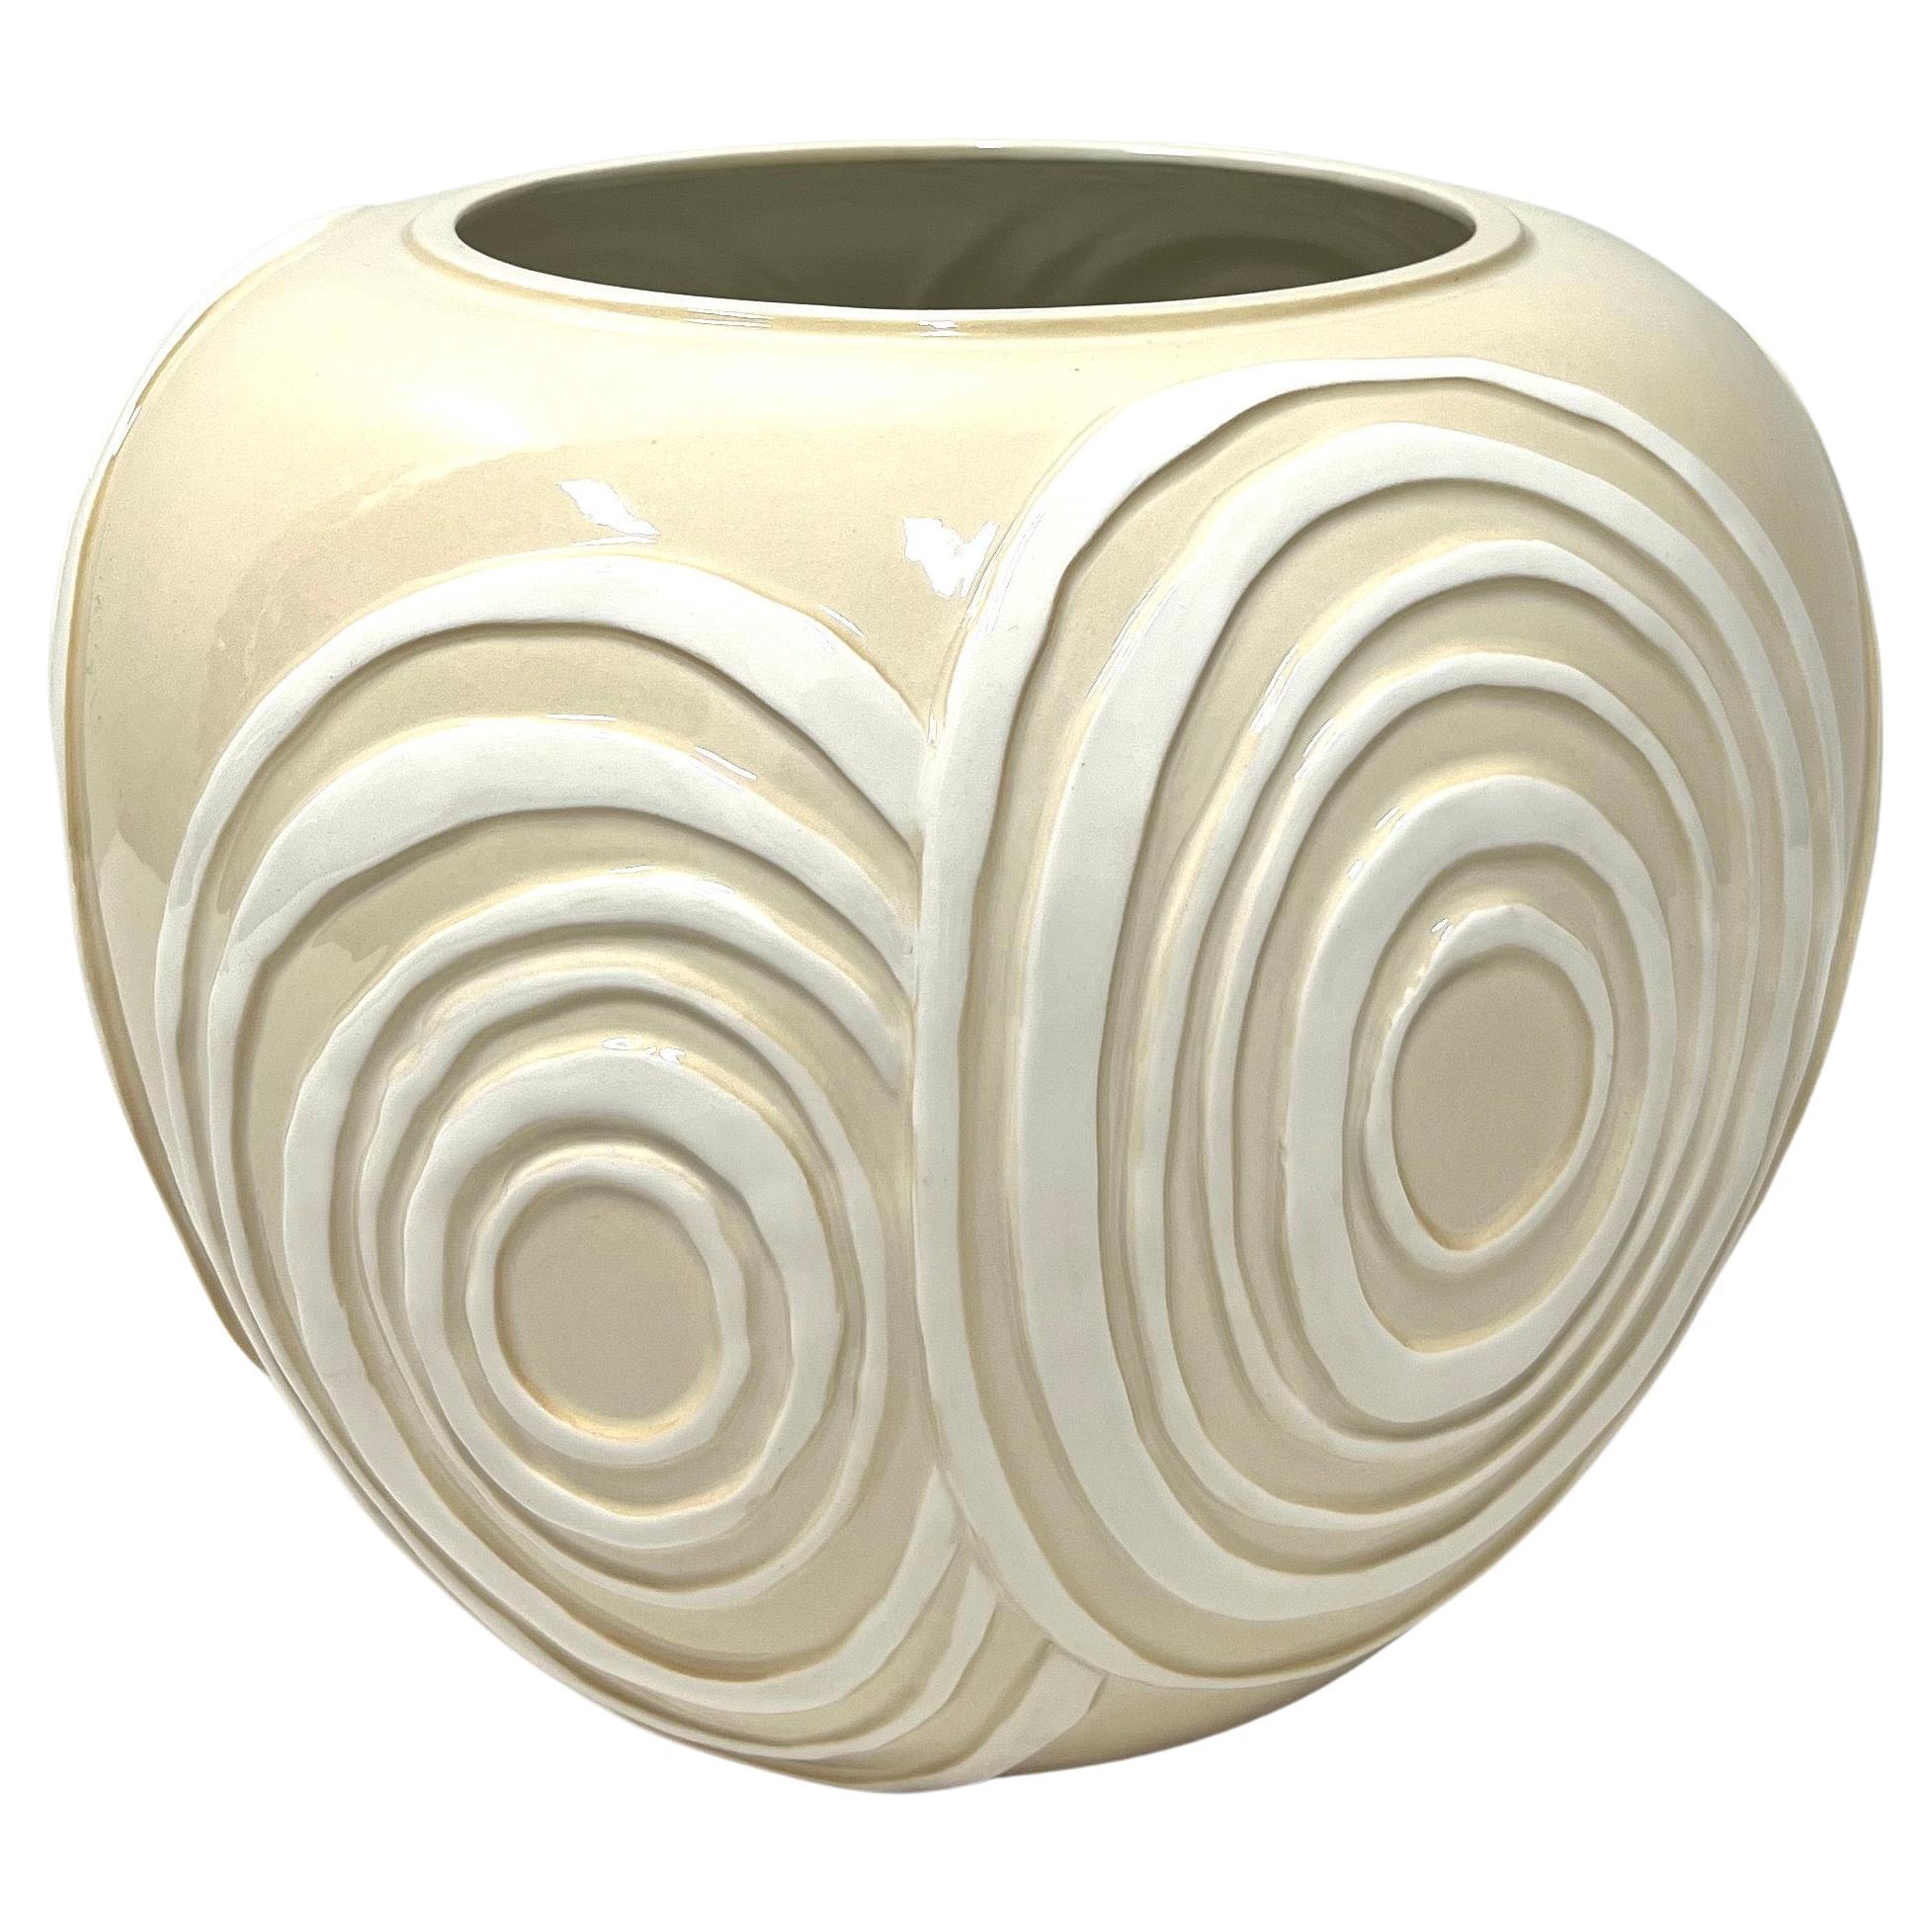 1980's Ceramic Contemporary Swirl Design Large Bowl For Sale